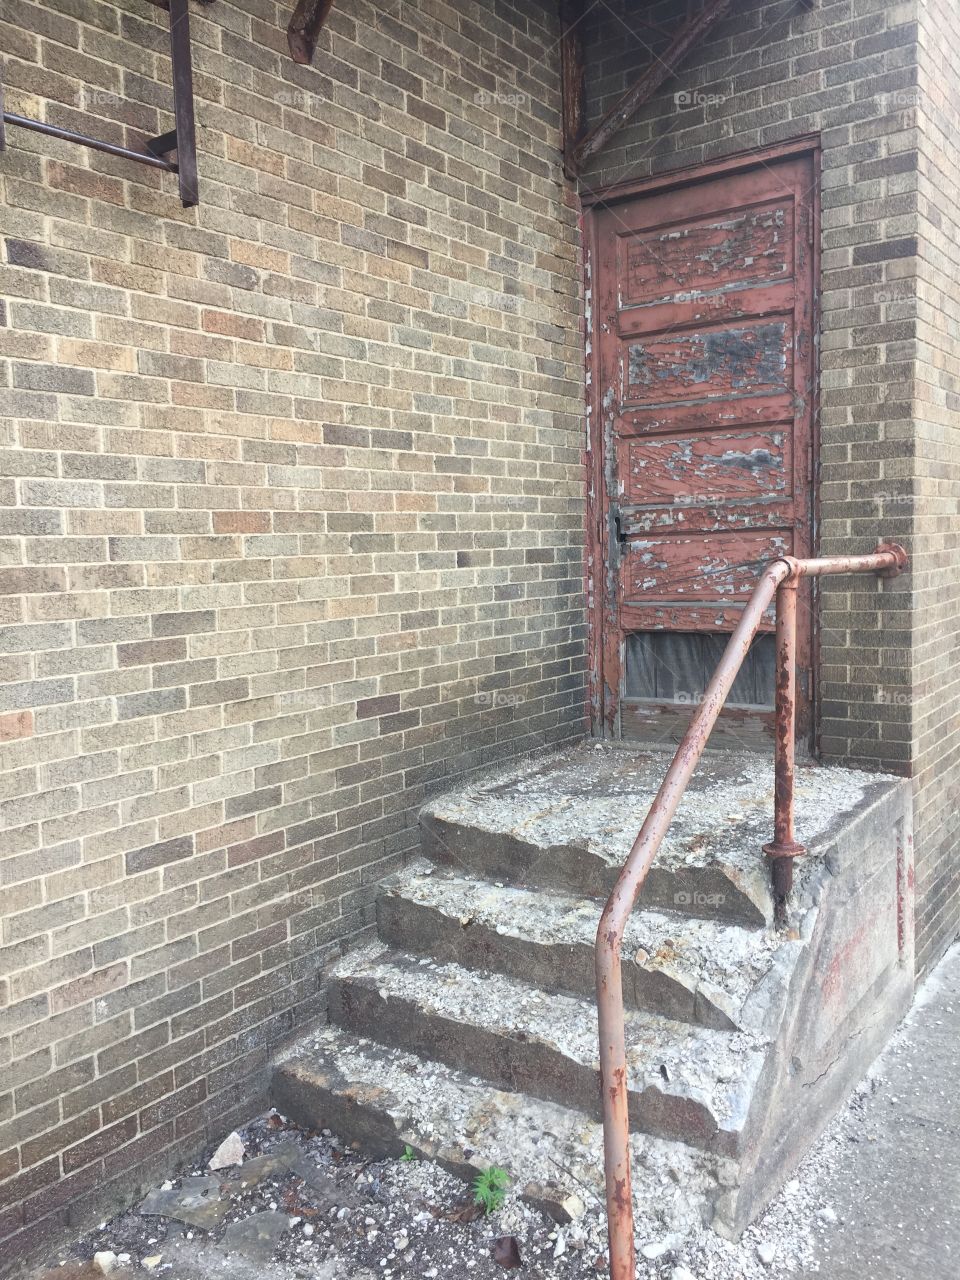 A back alley entrance, Athens Ohio